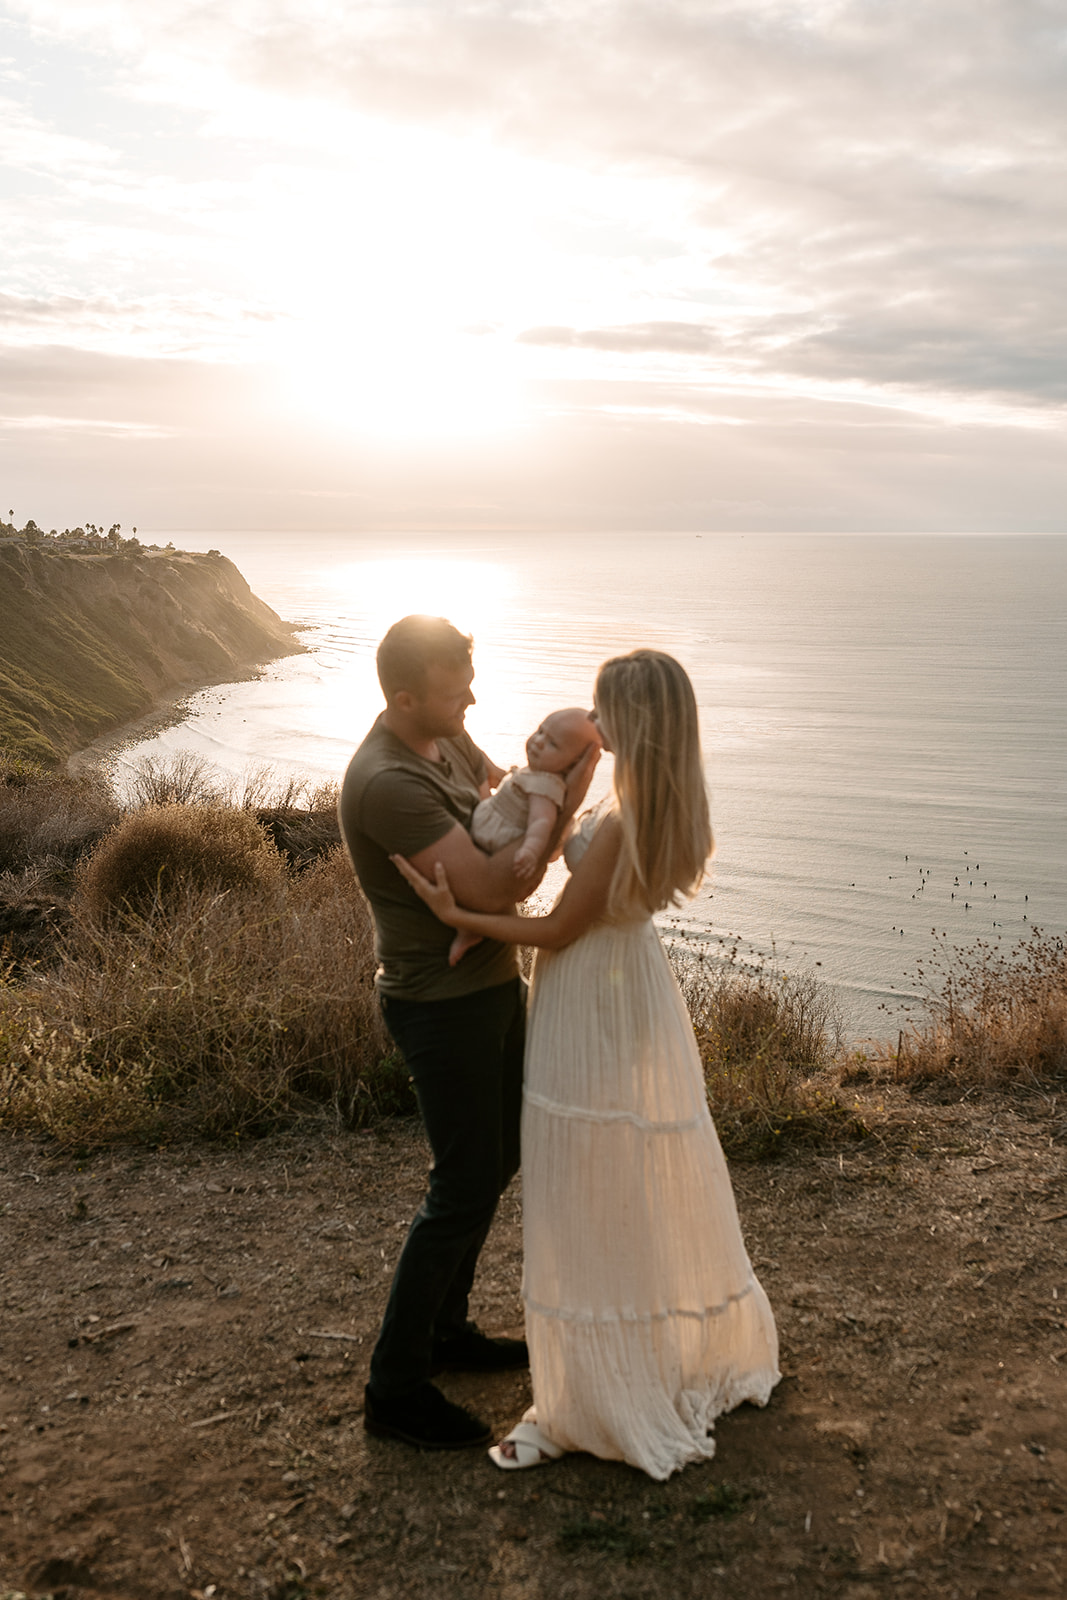 palos verdes sunset cliffside family newborn photoshoot best locations california beaches photoshoot locations socal